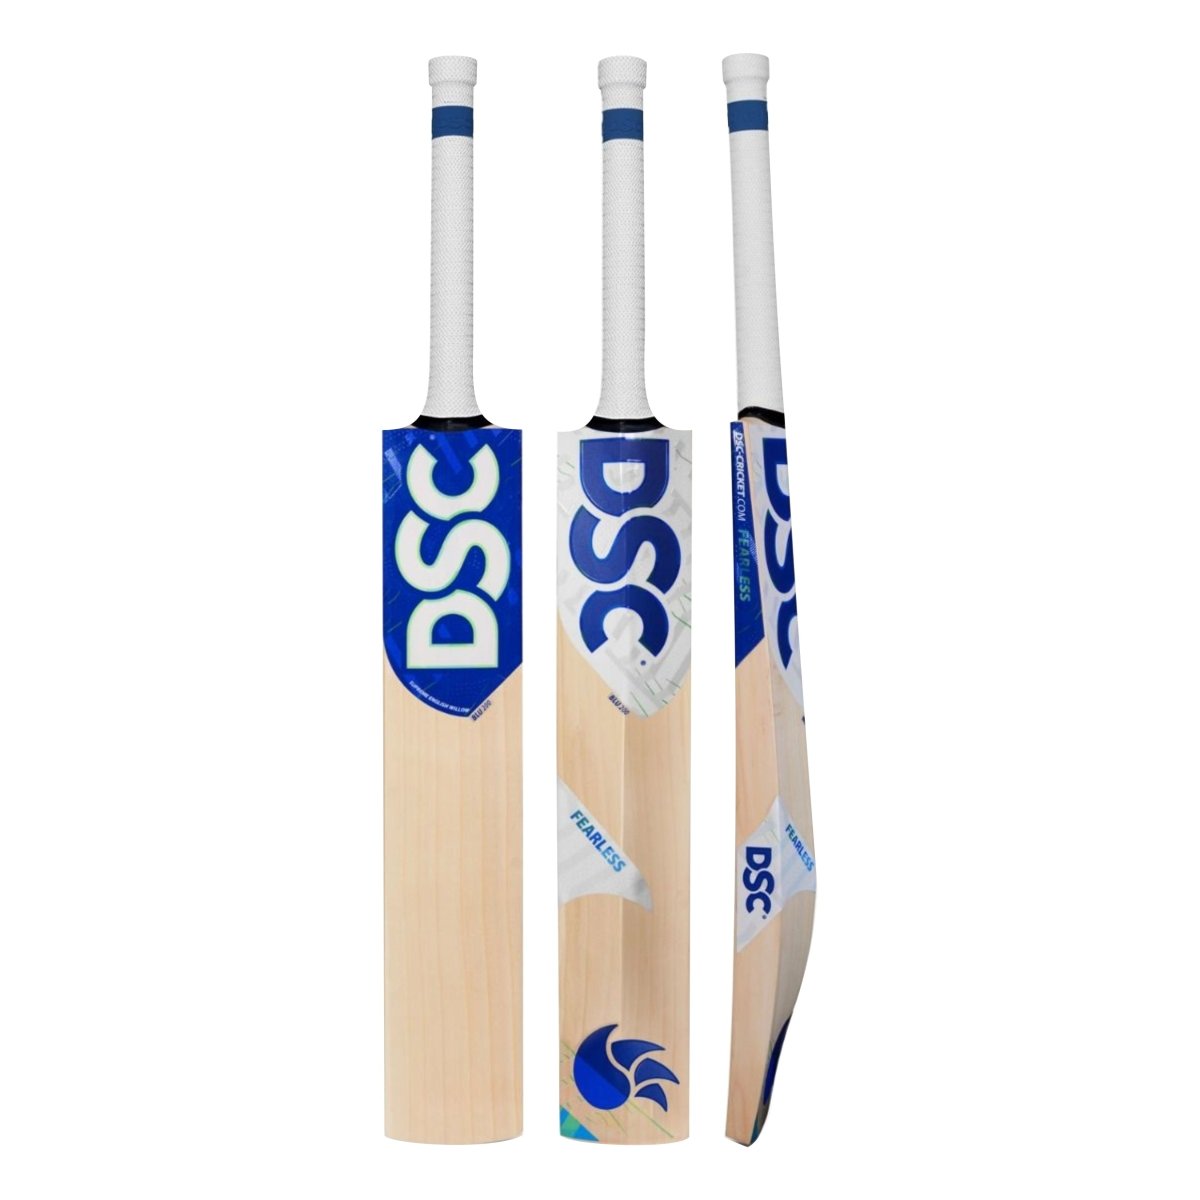 DSC Blu 200 English Willow Cricket Bat - Acrux Sports